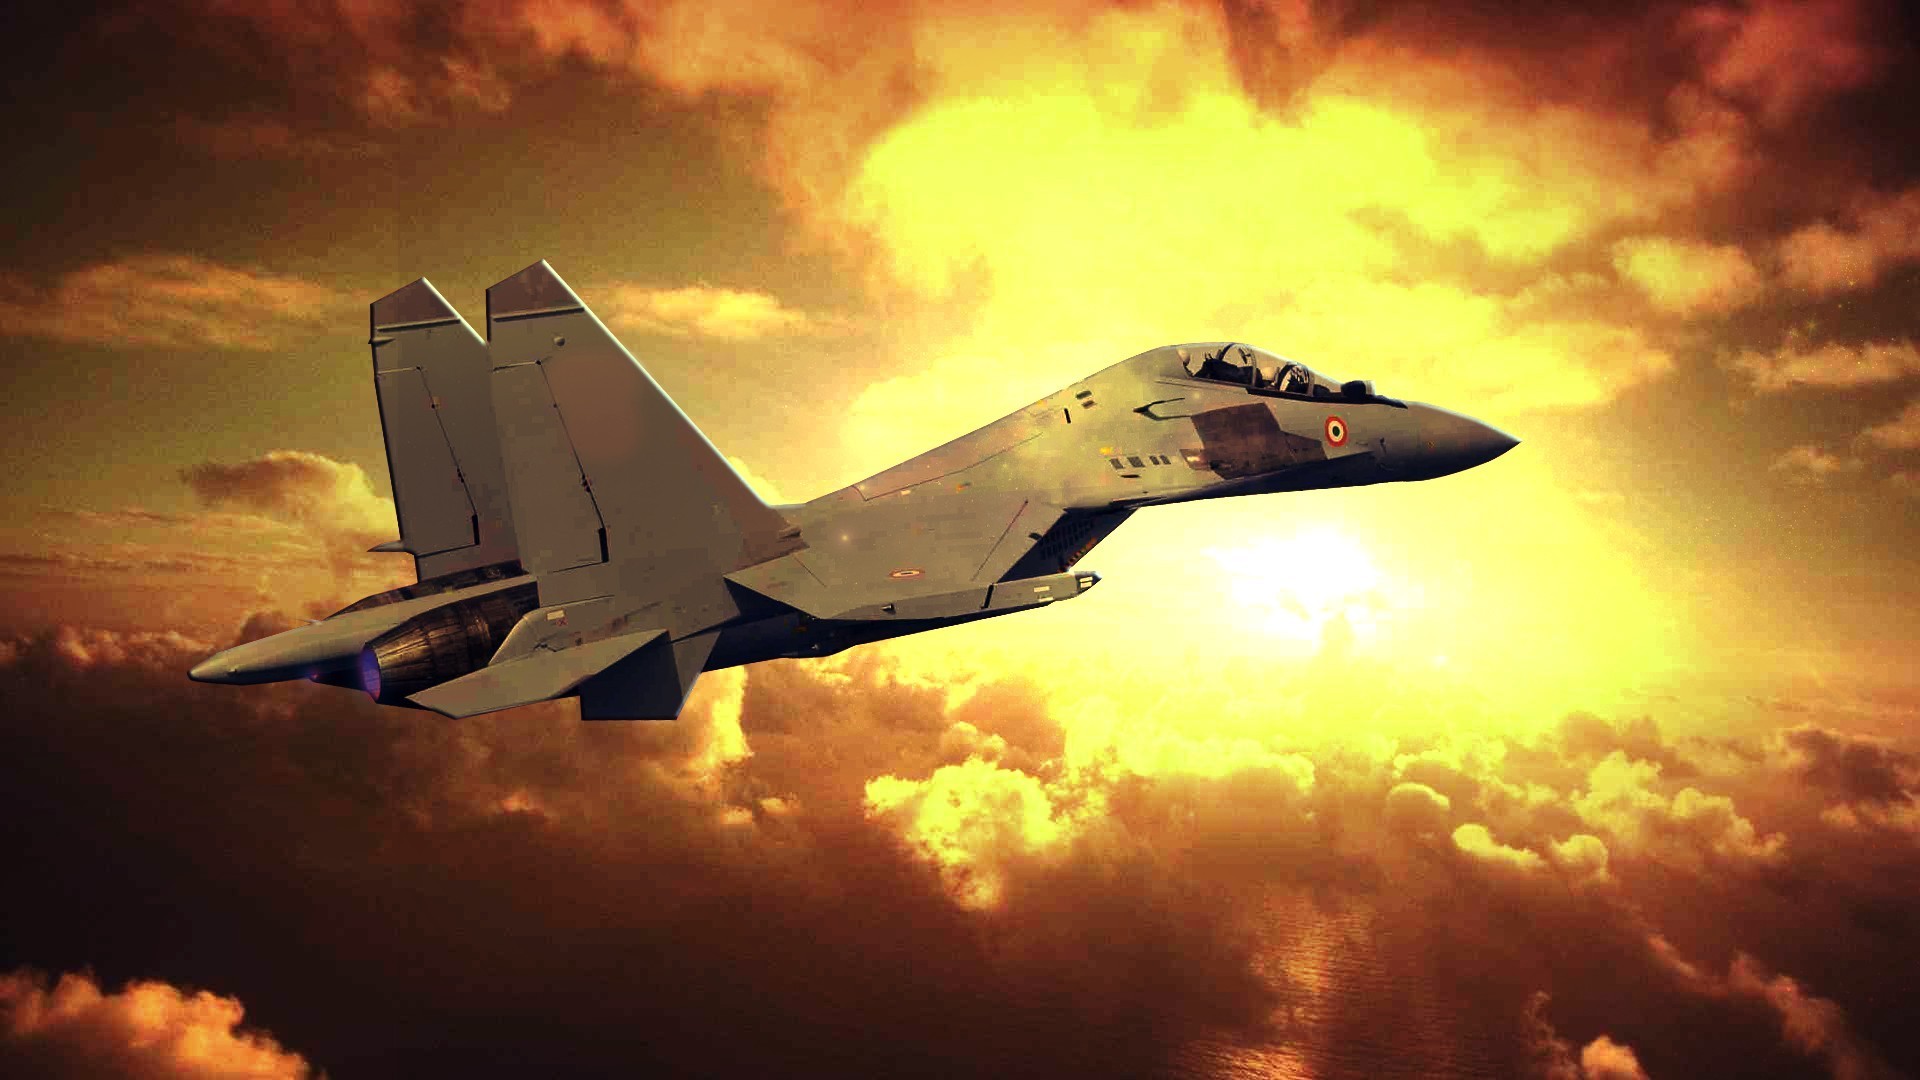 flugzeug wallpaper,airplane,aircraft,air force,military aircraft,fighter aircraft